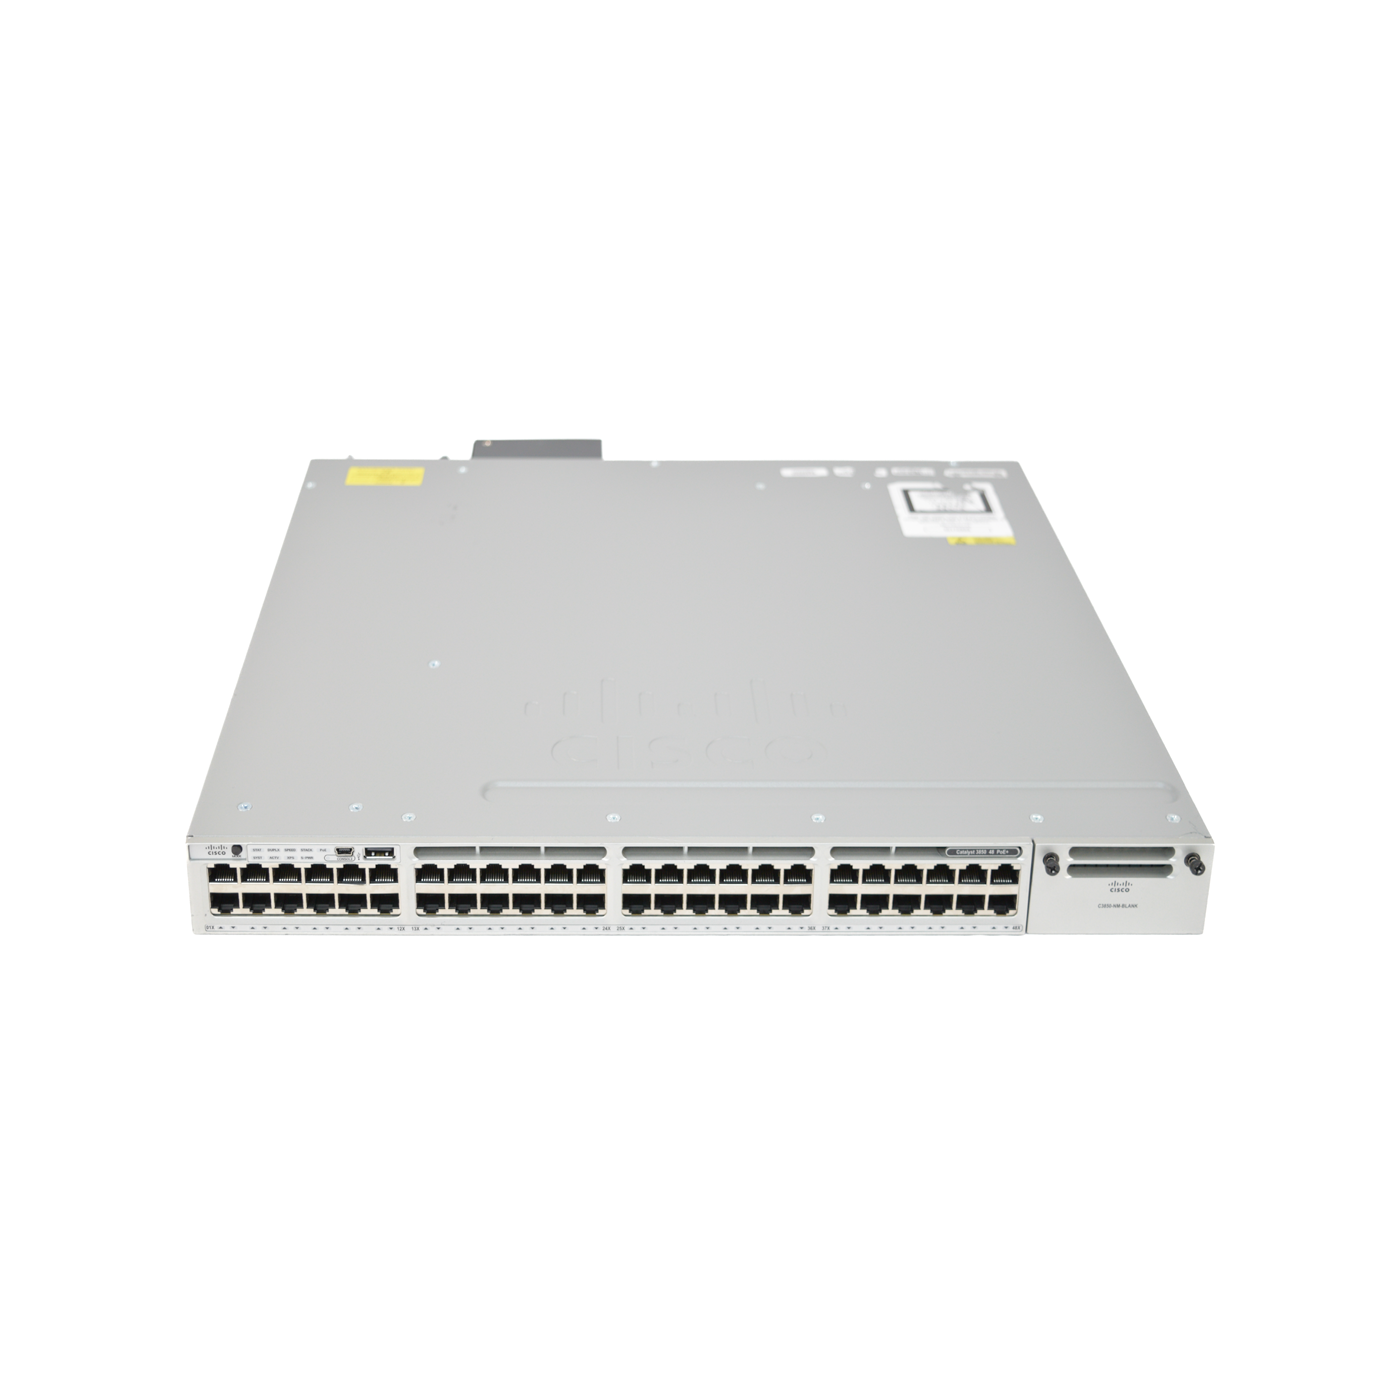 Cisco-WS-C3850-48F-L Switch - Front